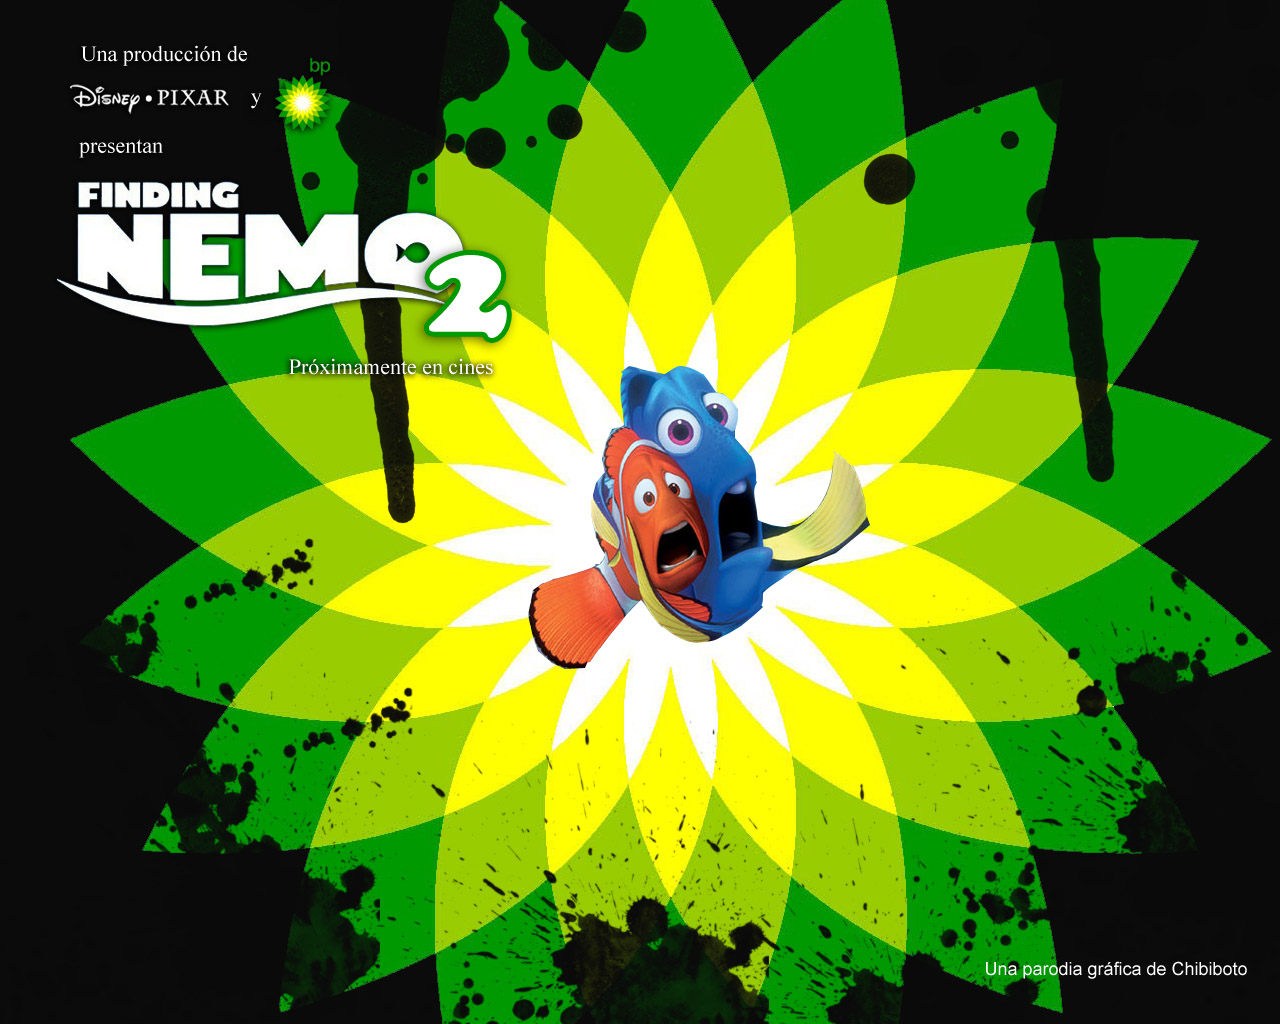 BP Nemo 2